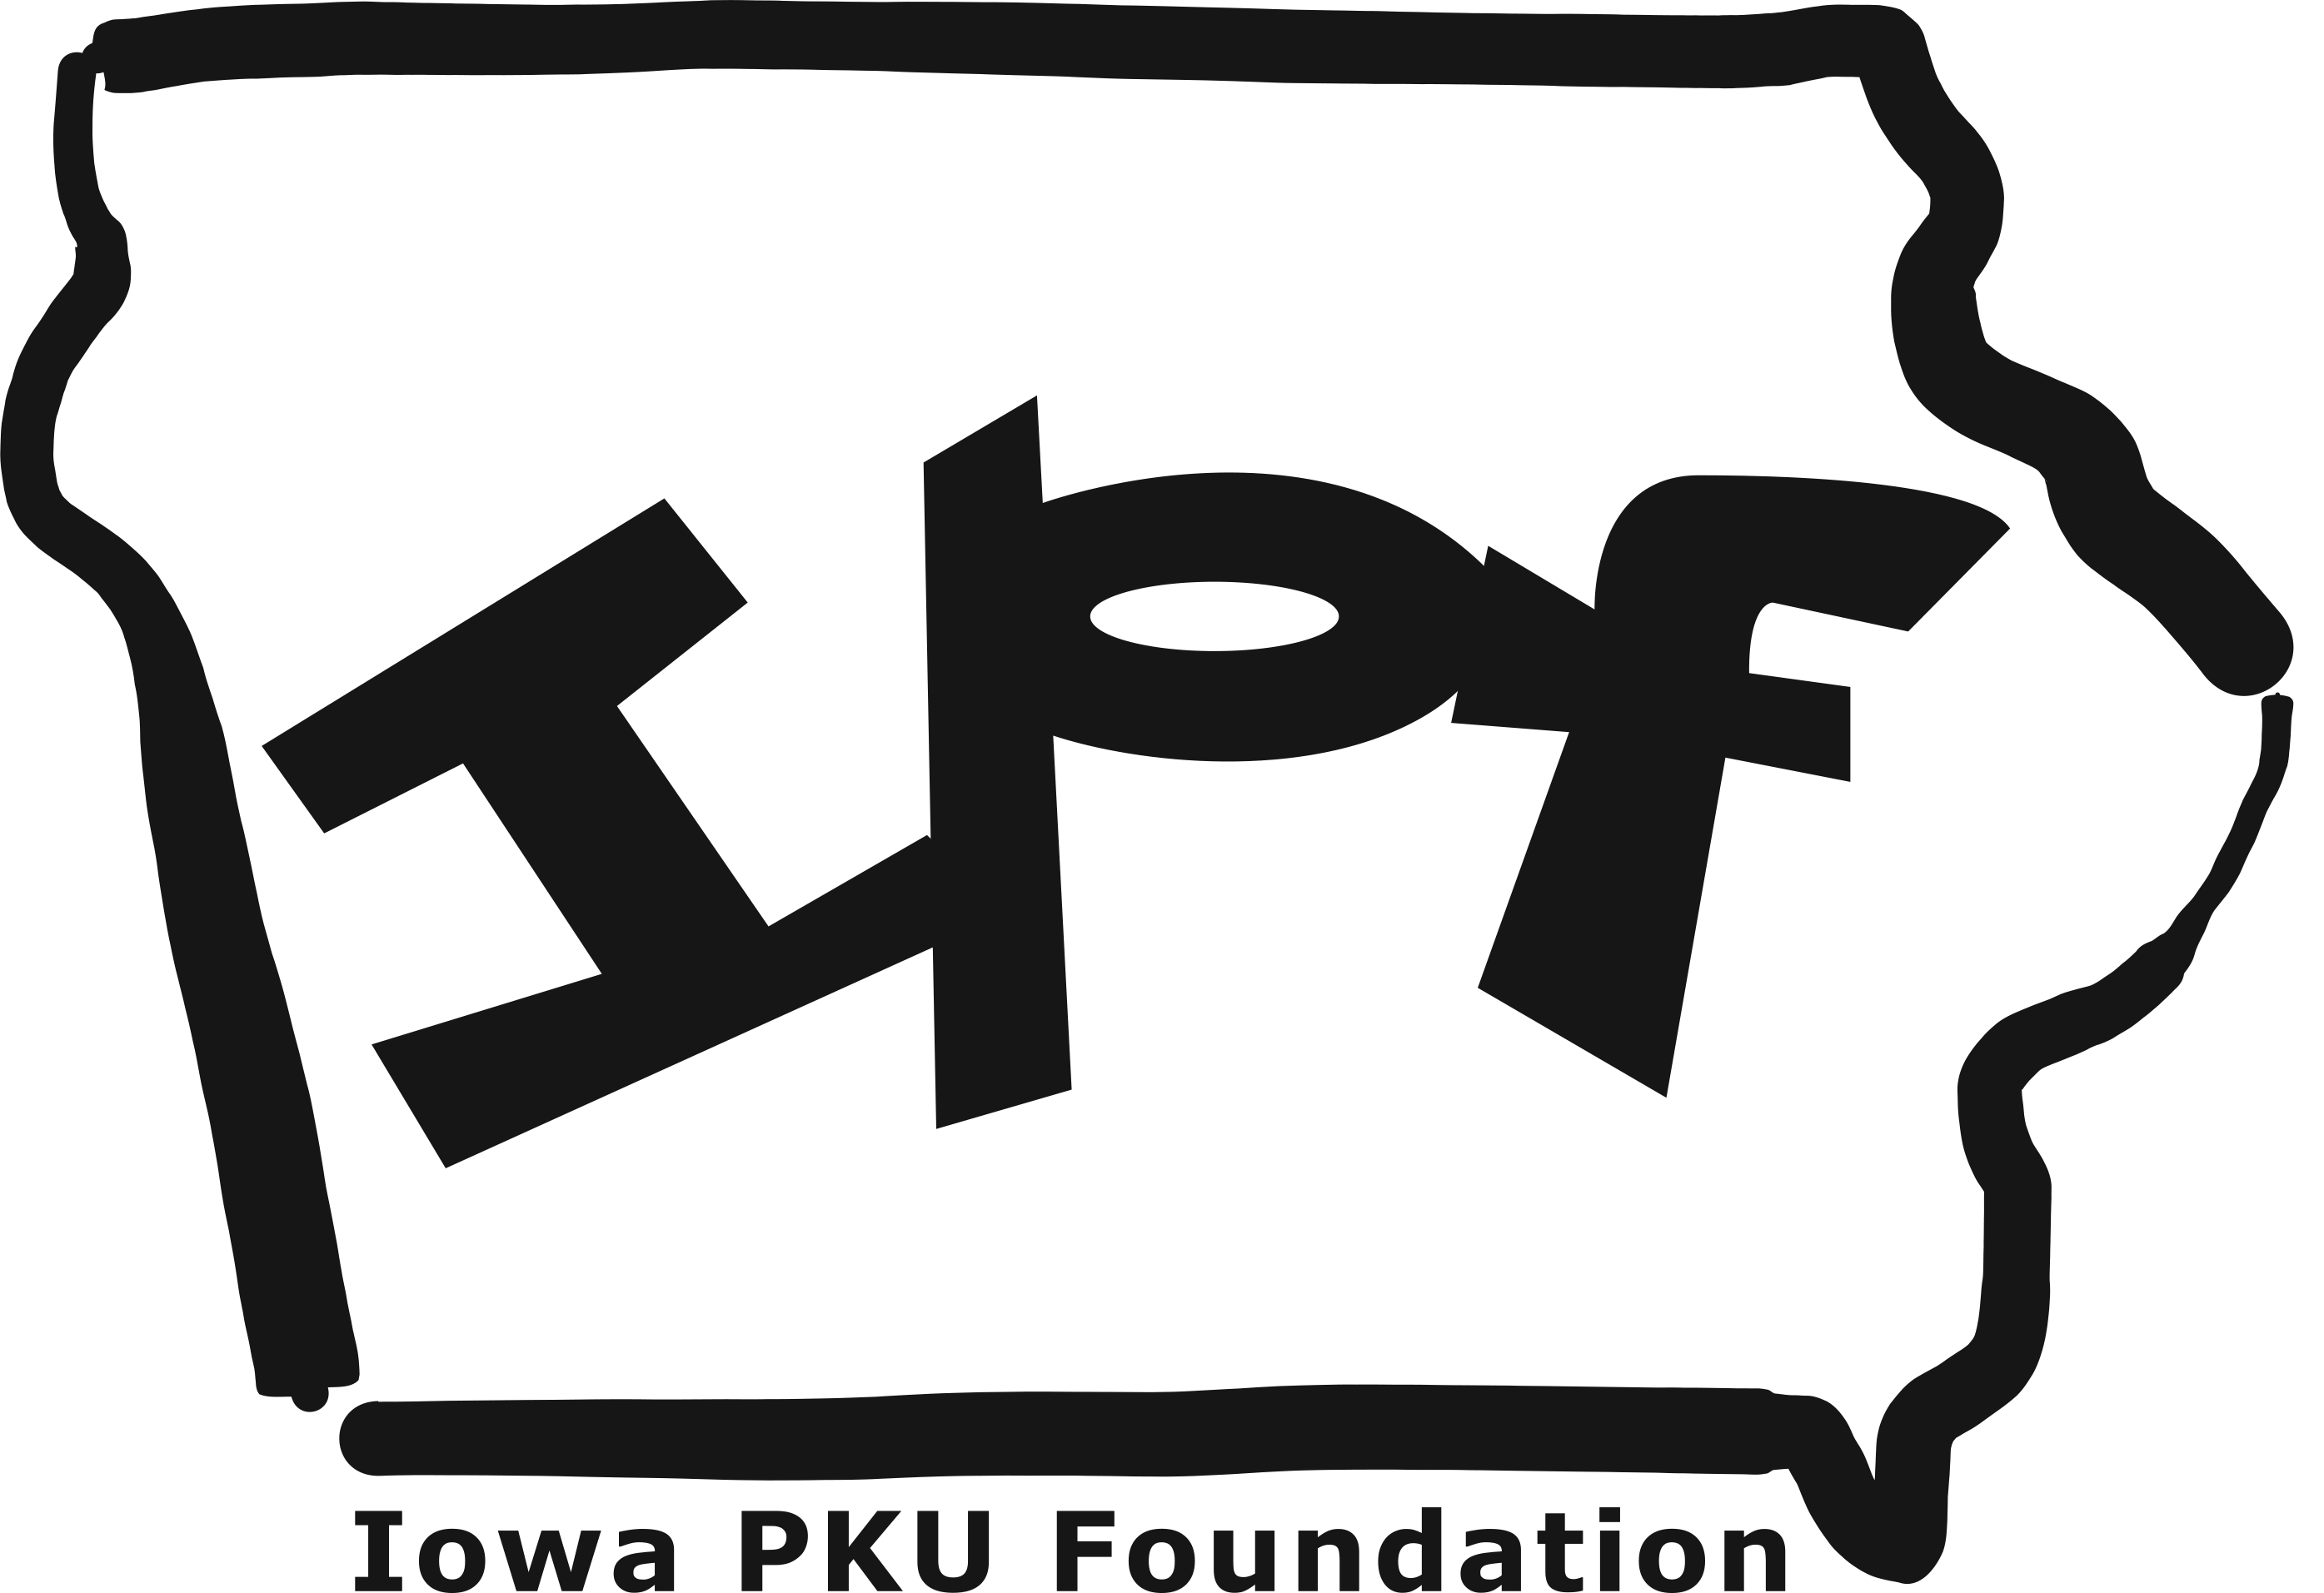 iowapkufoundation.org logo